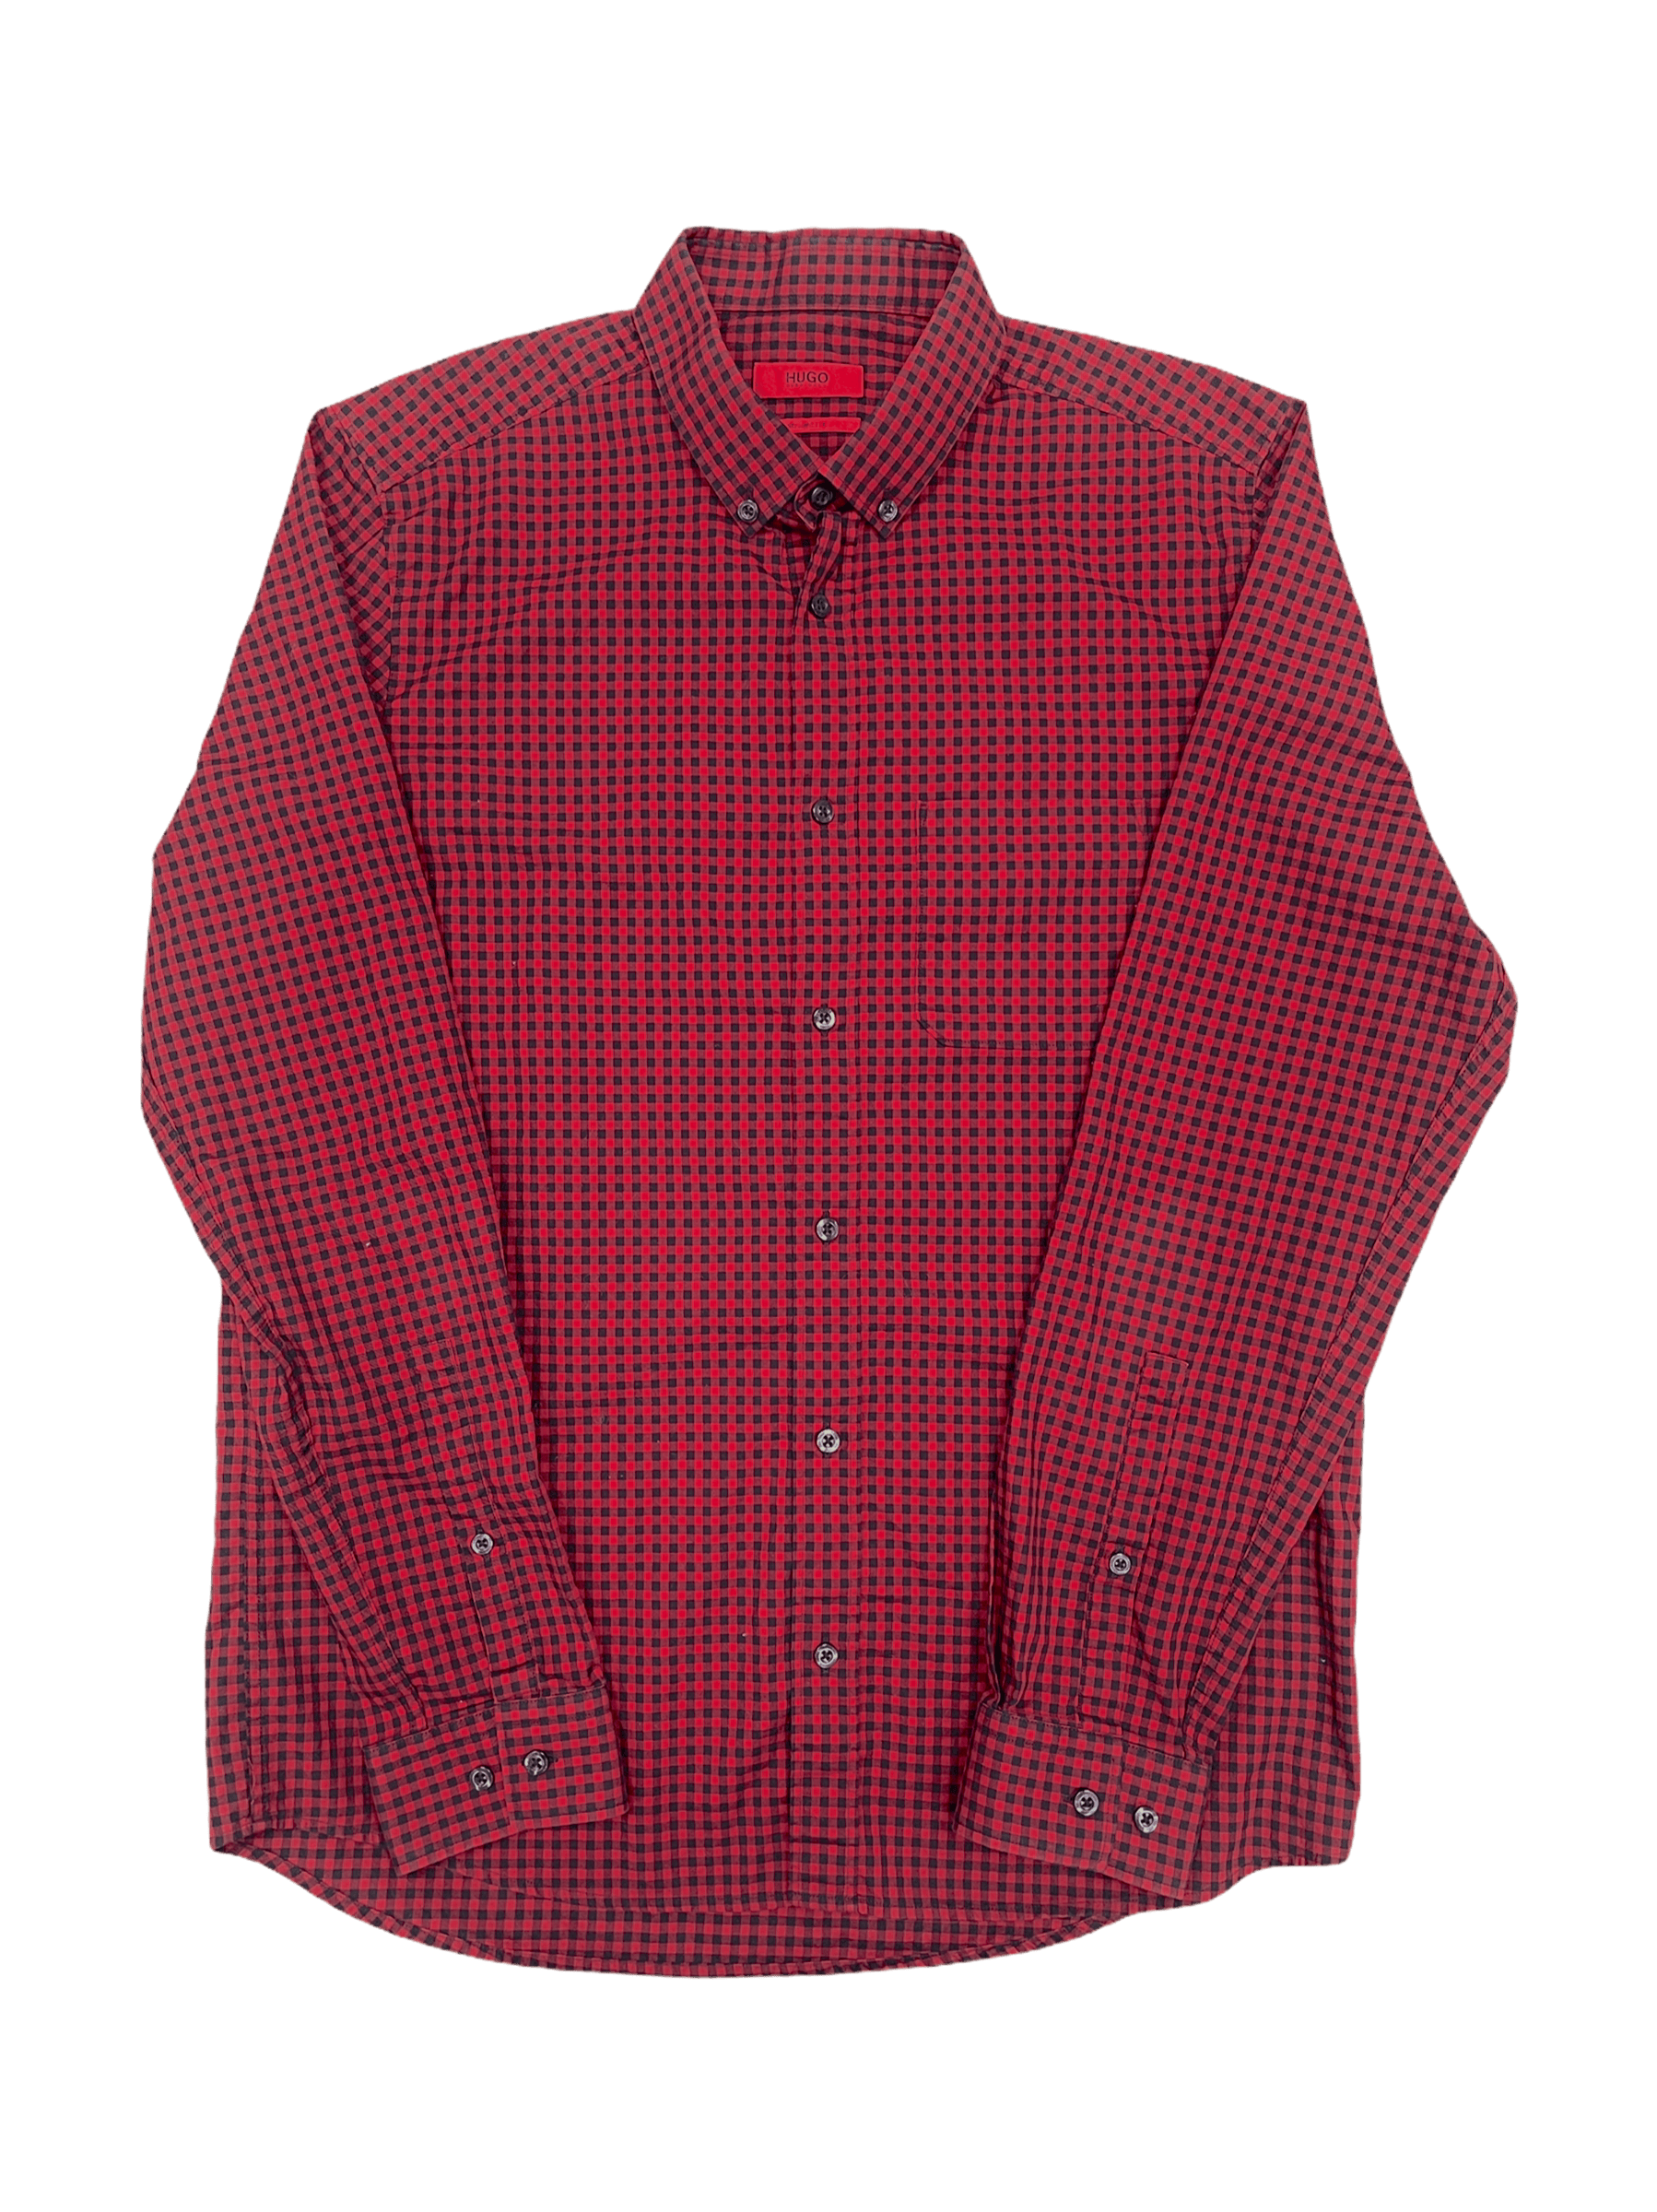 Hugo Boss Gingham Plaid Button Up Shirt, Red & black—Genuine Design luxury consignment